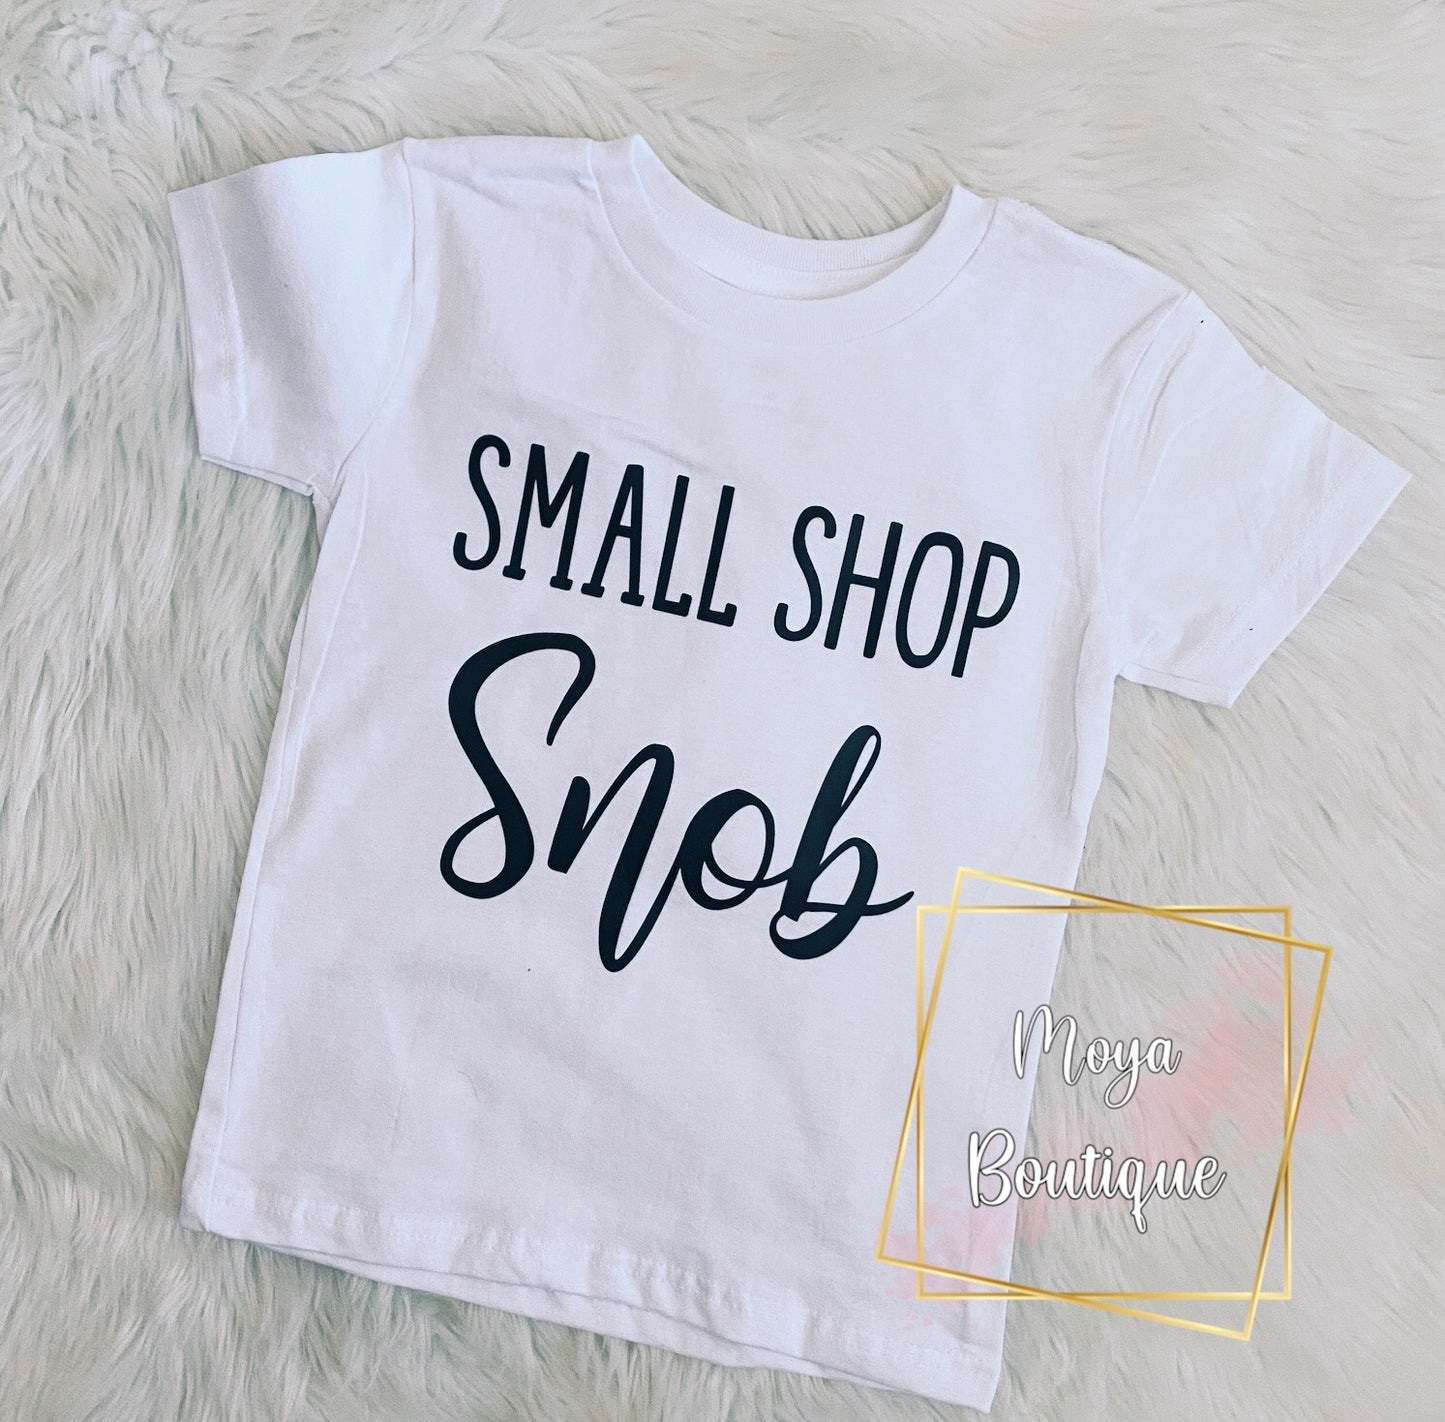 Small shop snob